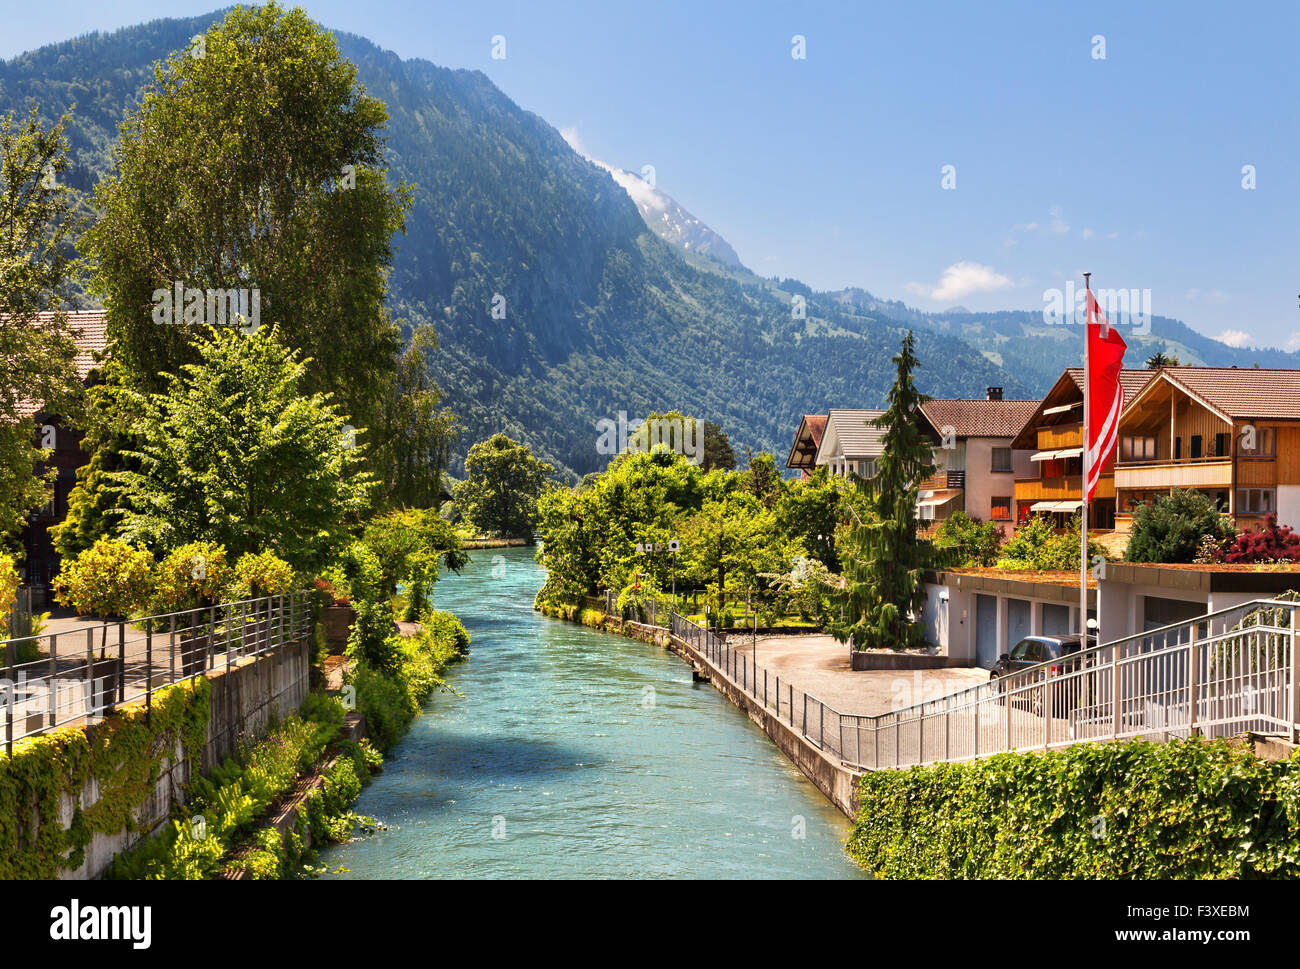 Switzerland interlaken hi-res stock photography and images - Alamy